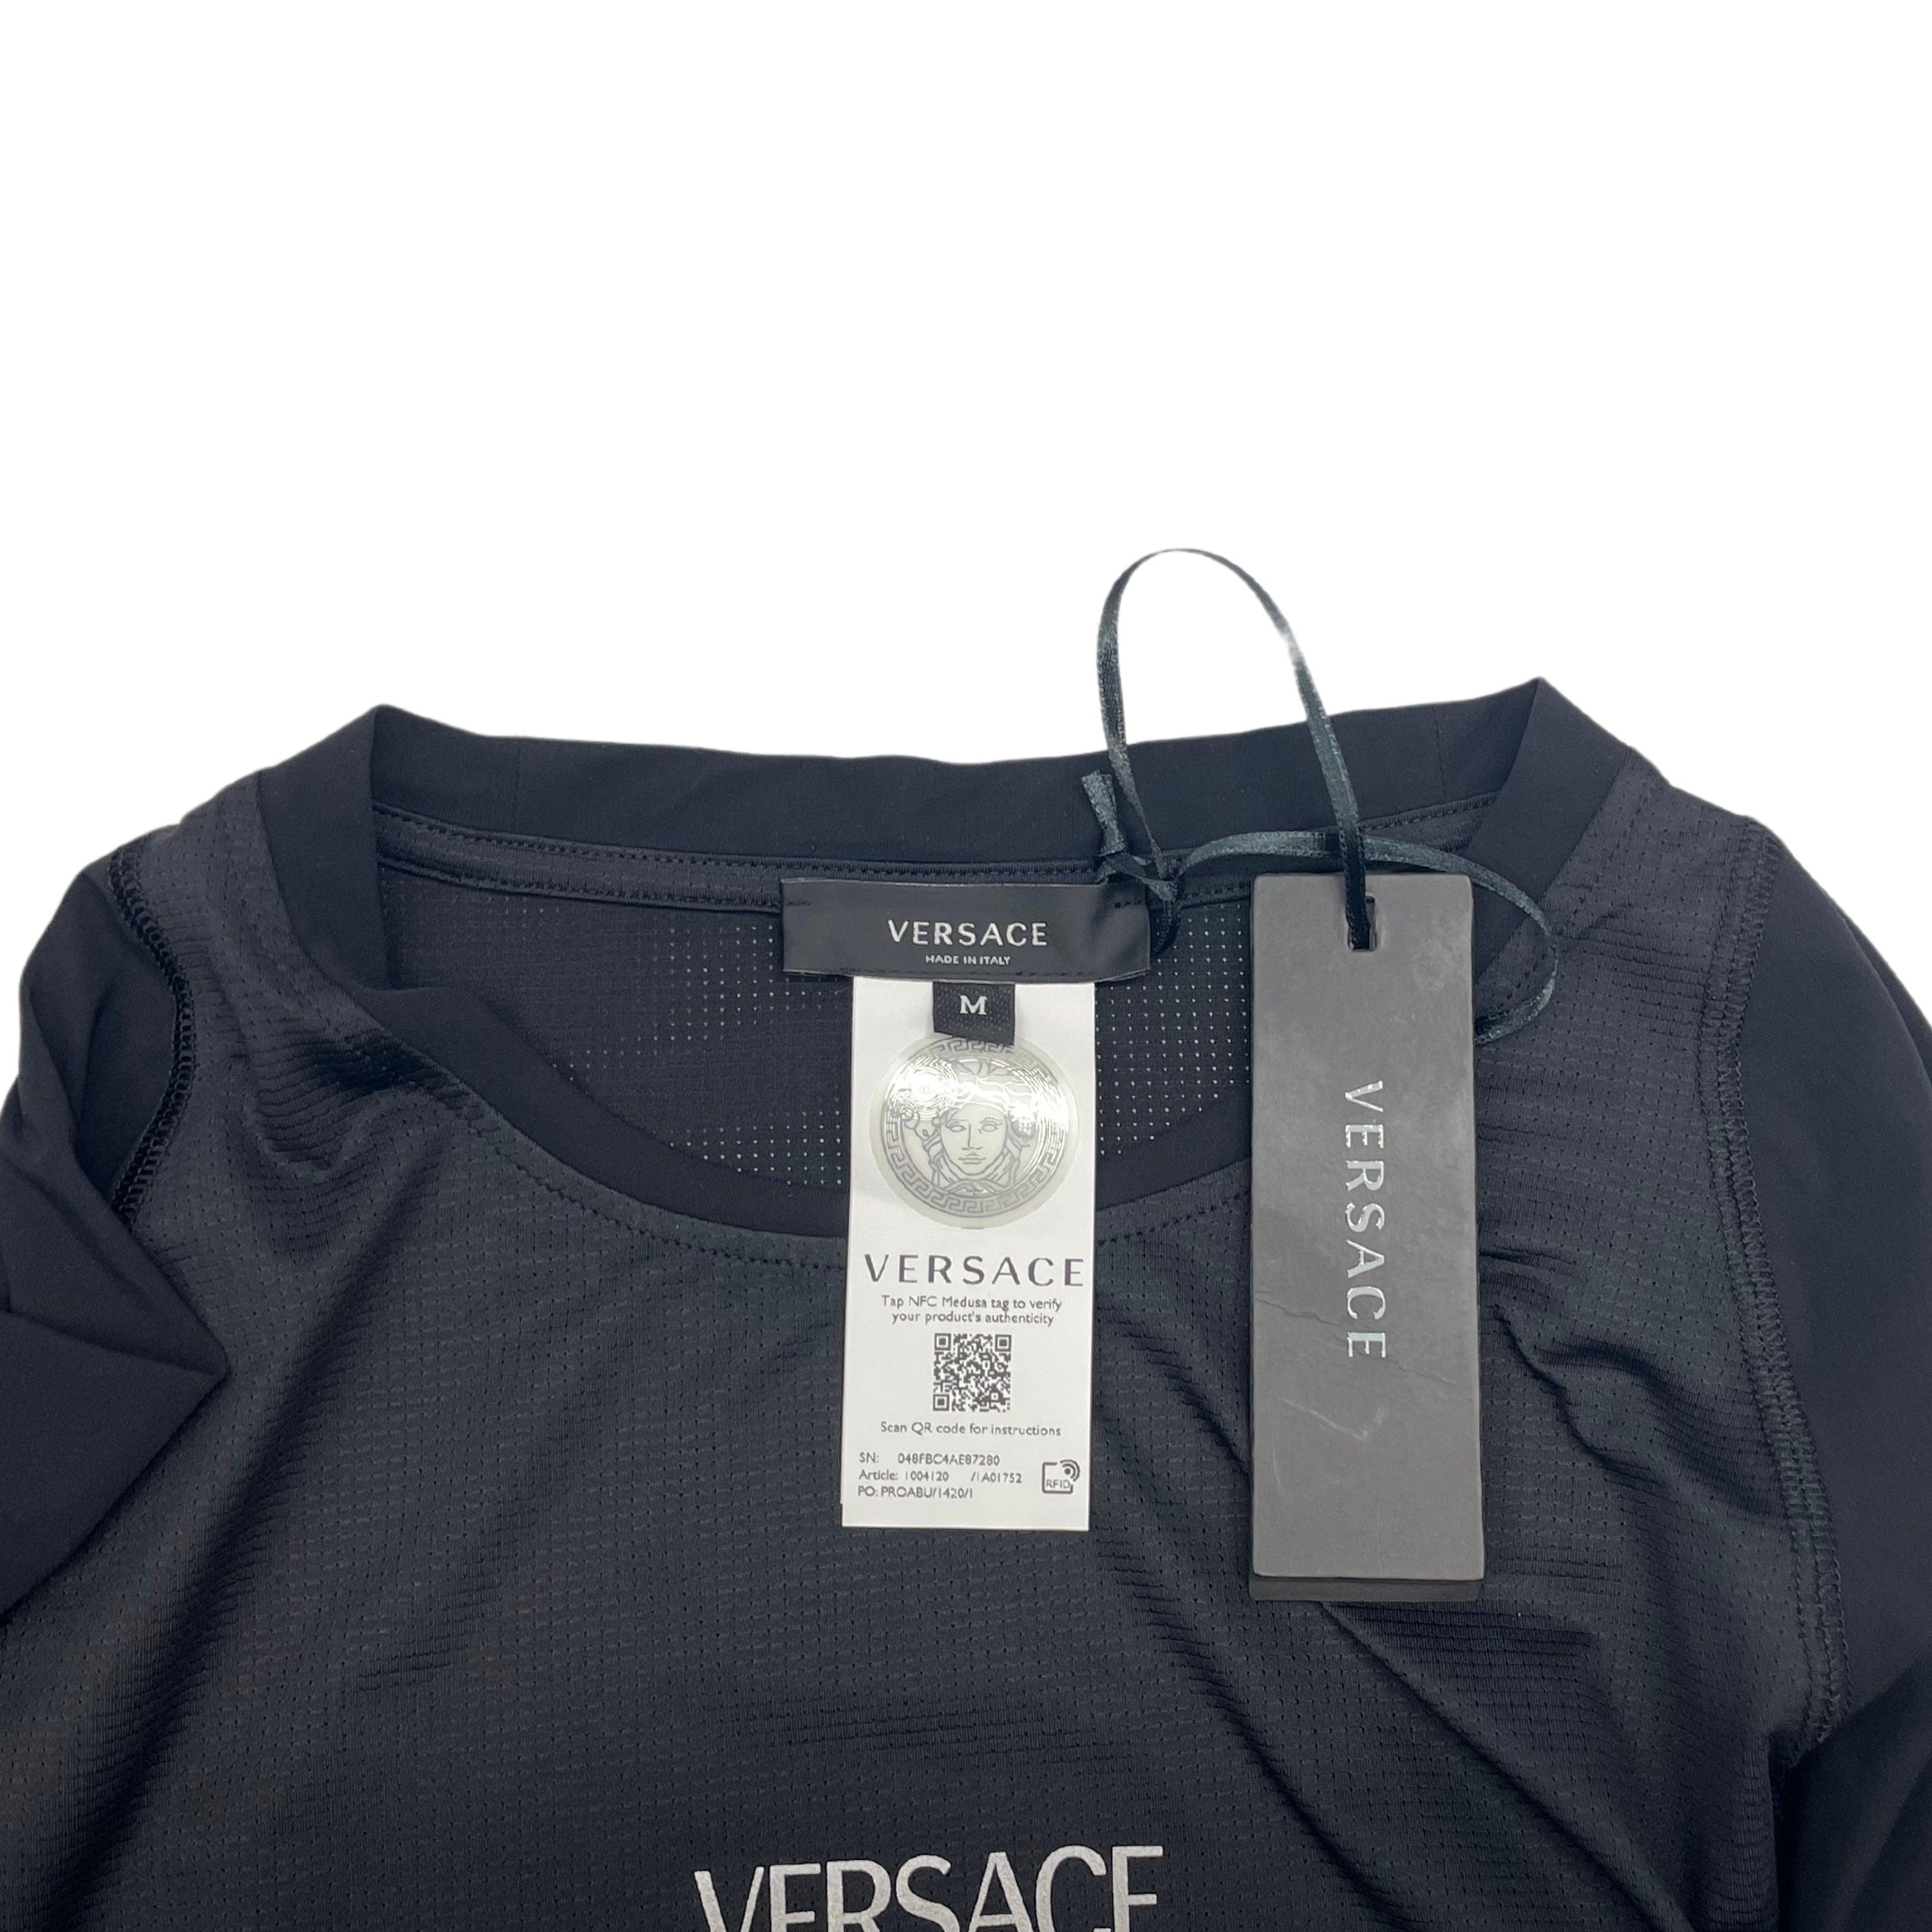 Versace T-Shirt - Women's M - Fashionably Yours